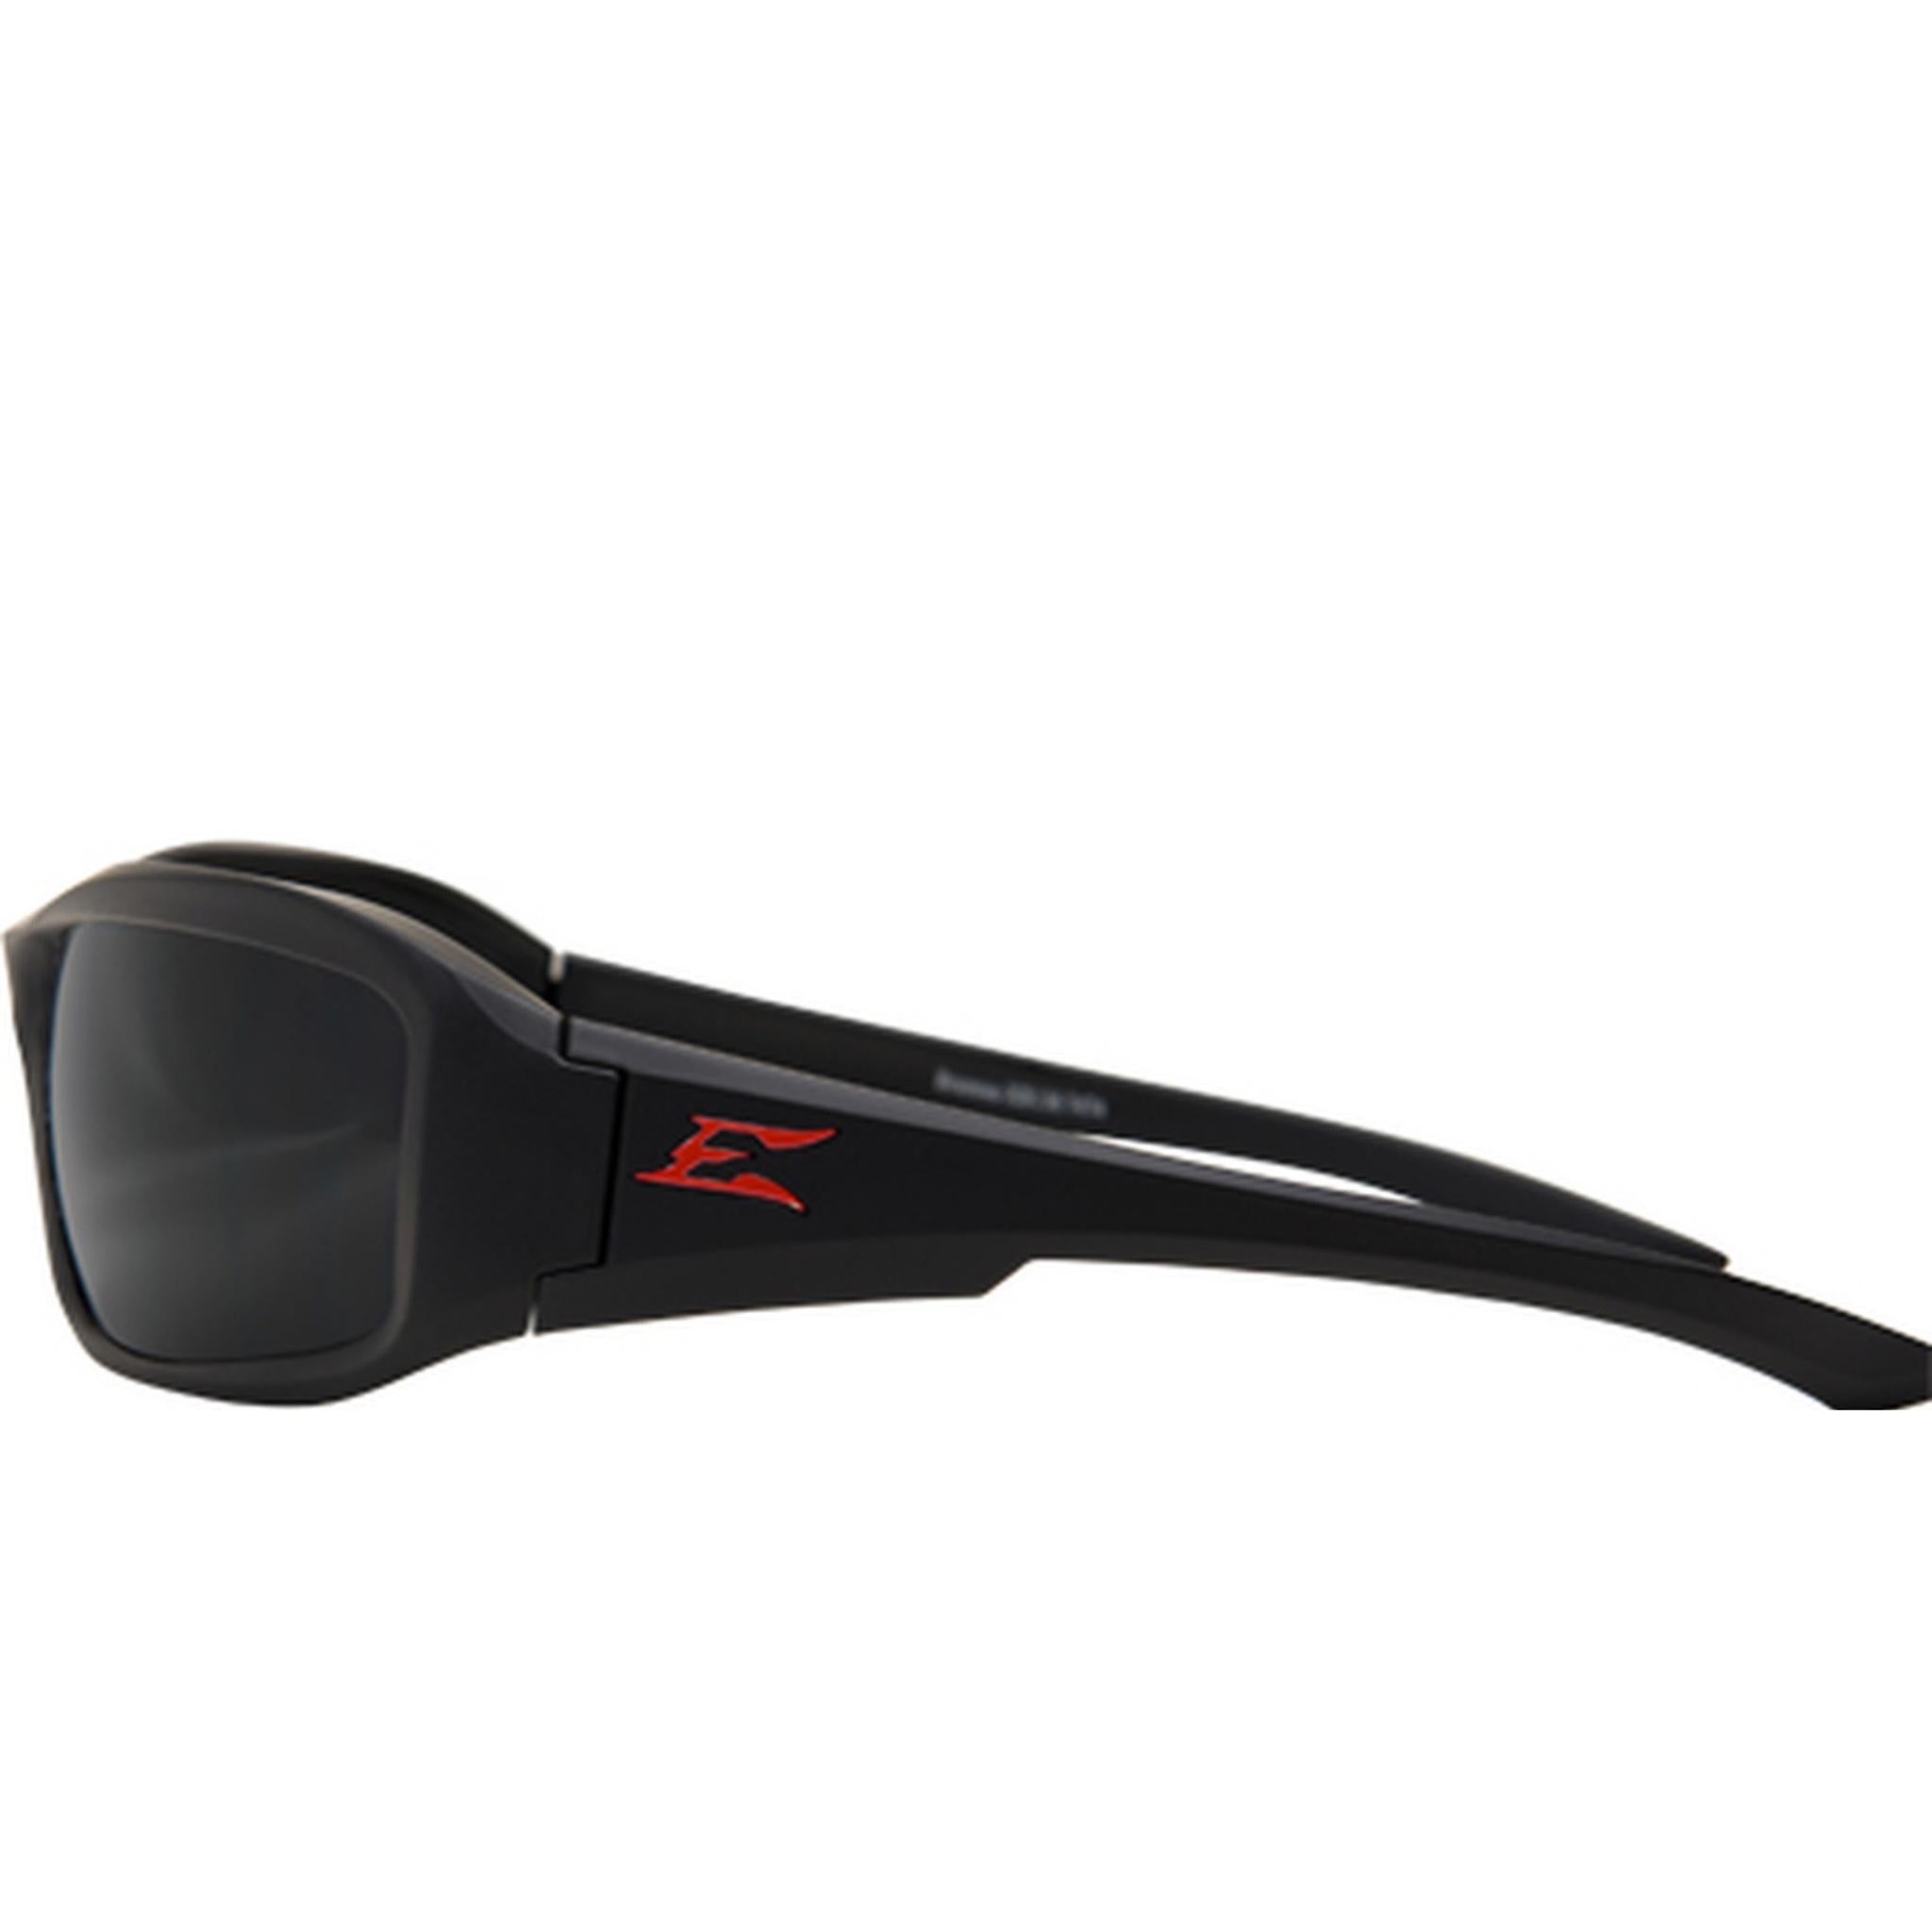 EDGE TSK236 Kazbek Torque Safety Glasses, Matte Black Frame with Red E Logo, Polarized Smoke Lens